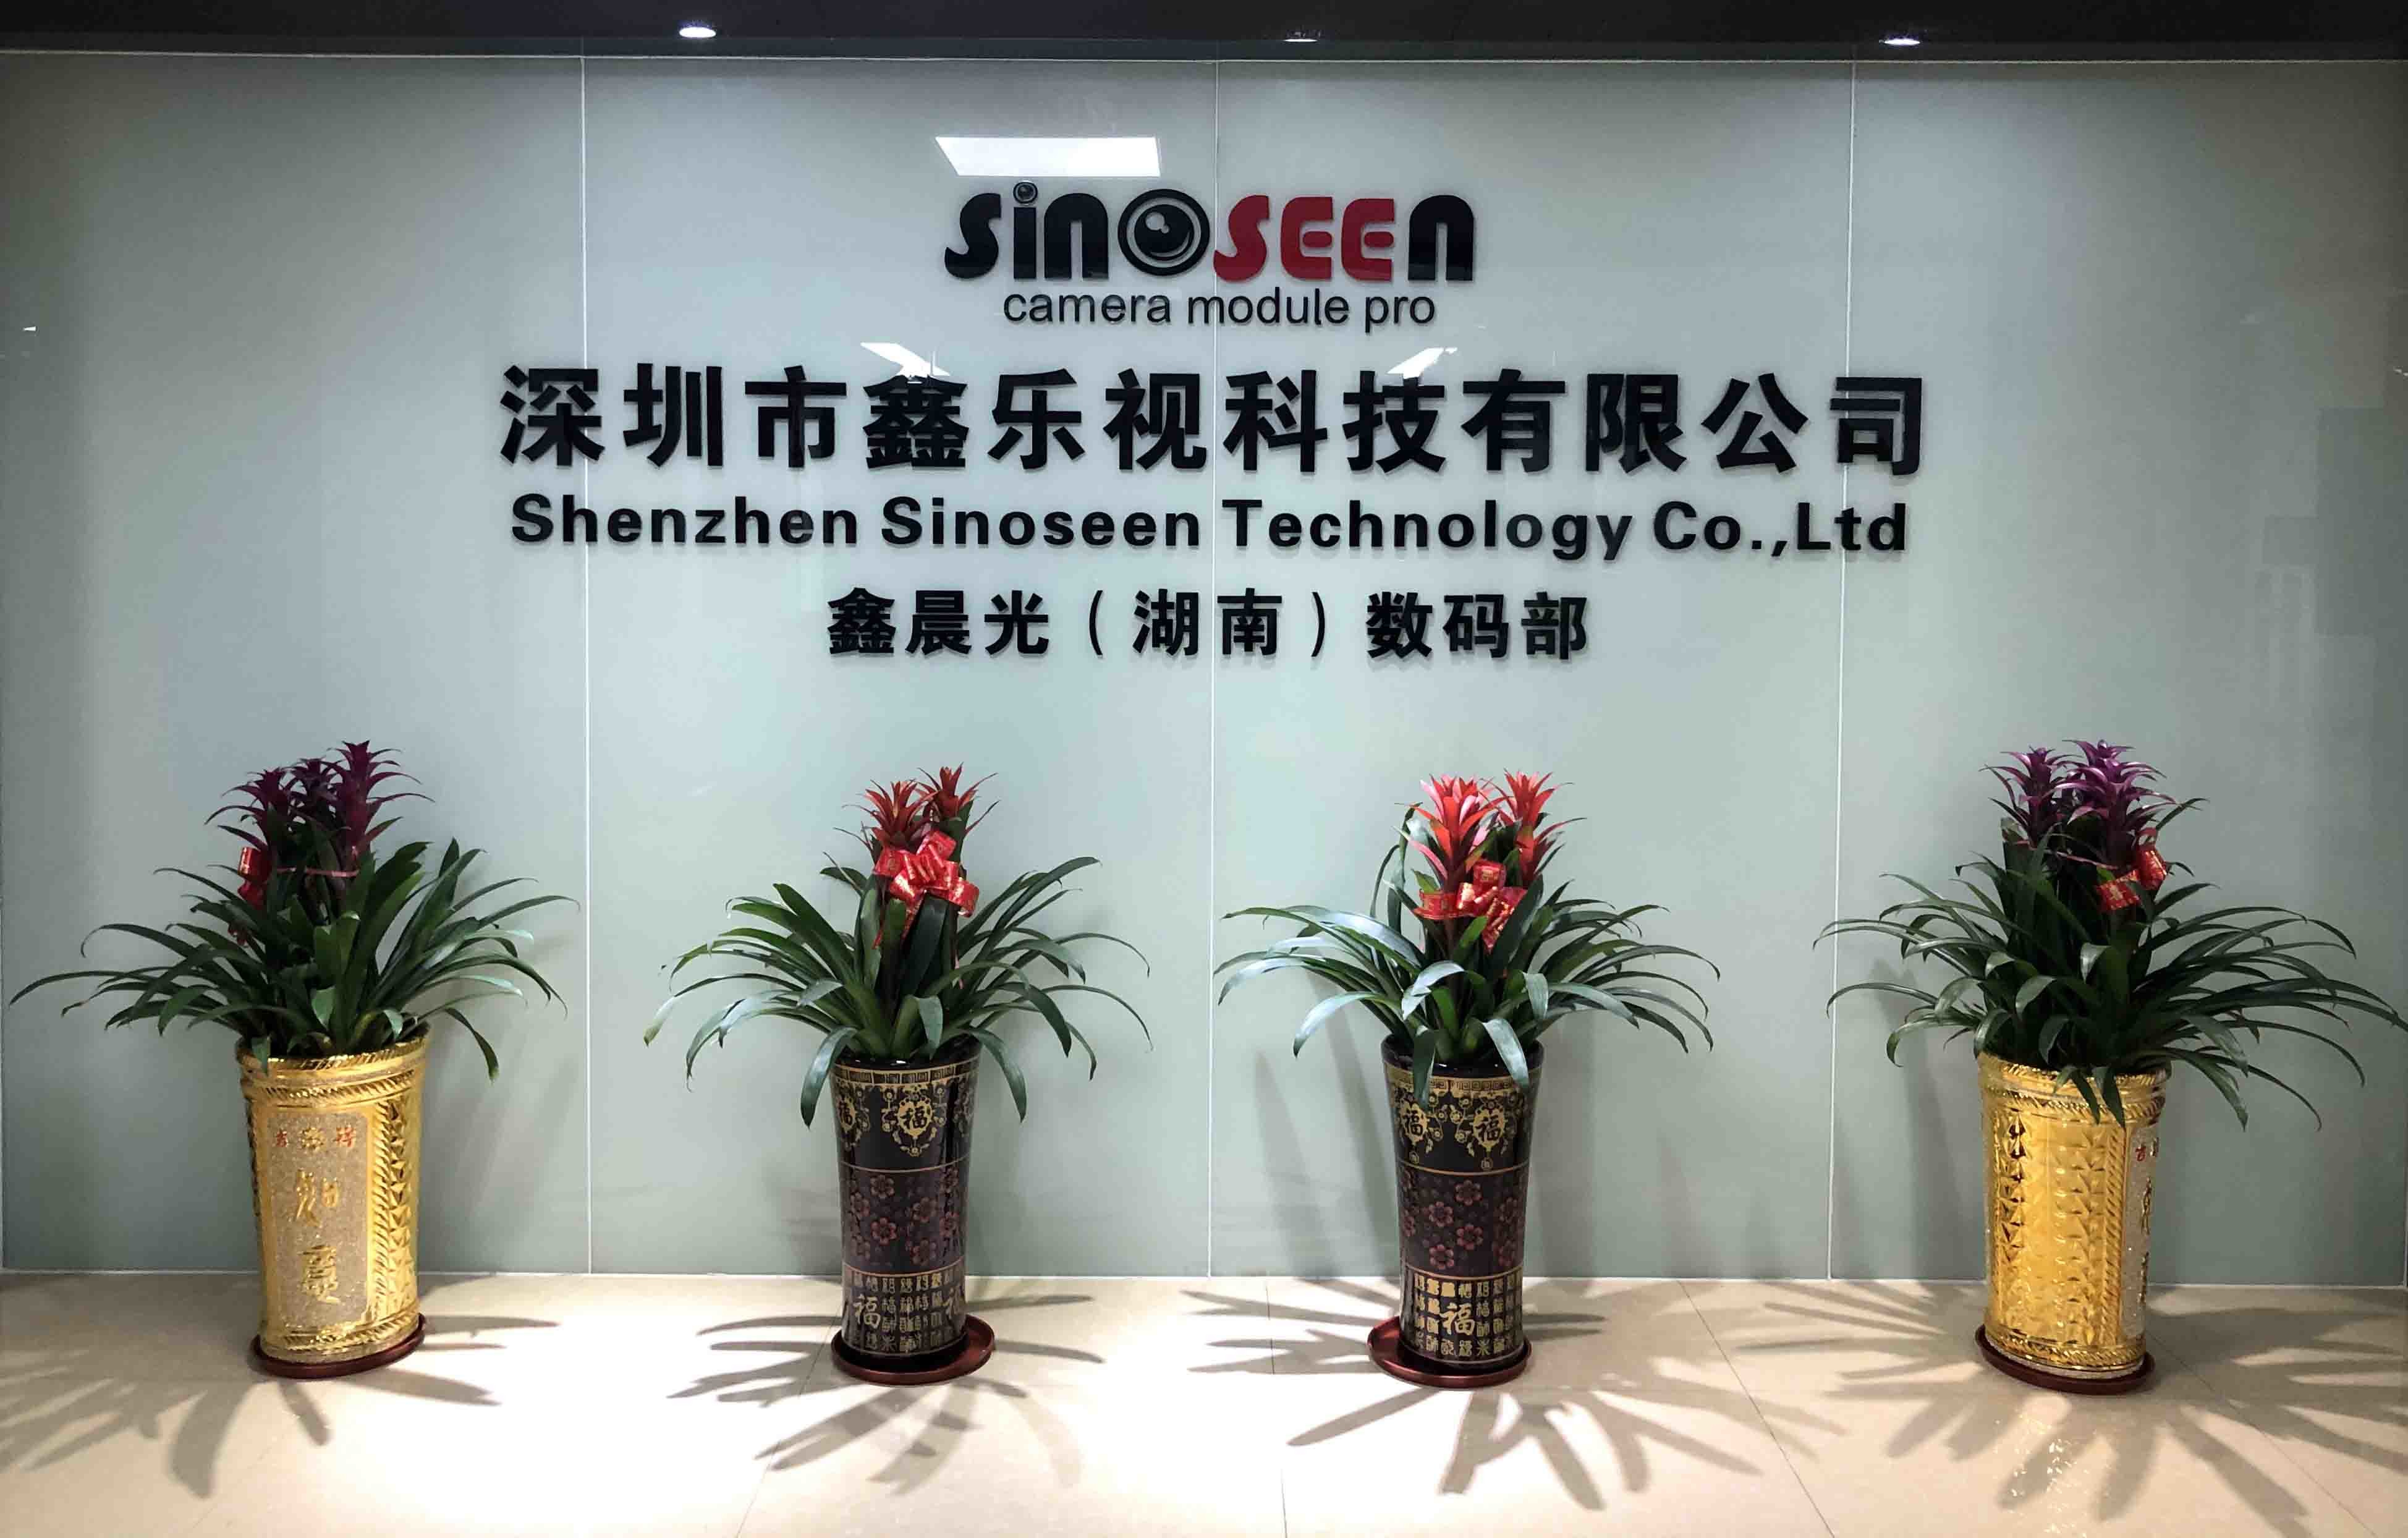 China Shenzhen Sinoseen Technology Co., Ltd Perfil da companhia